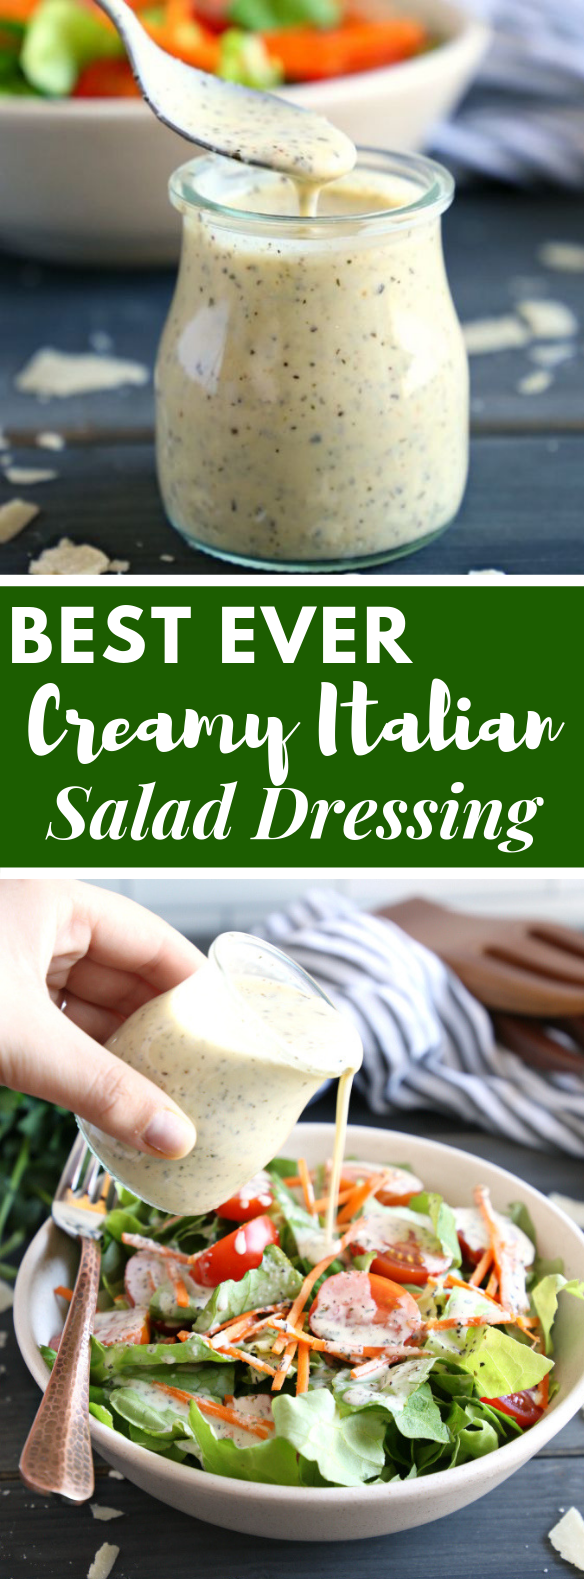 CLASSIC CREAMY ITALIAN SALAD DRESSING #dresssingrecipe #easysalad